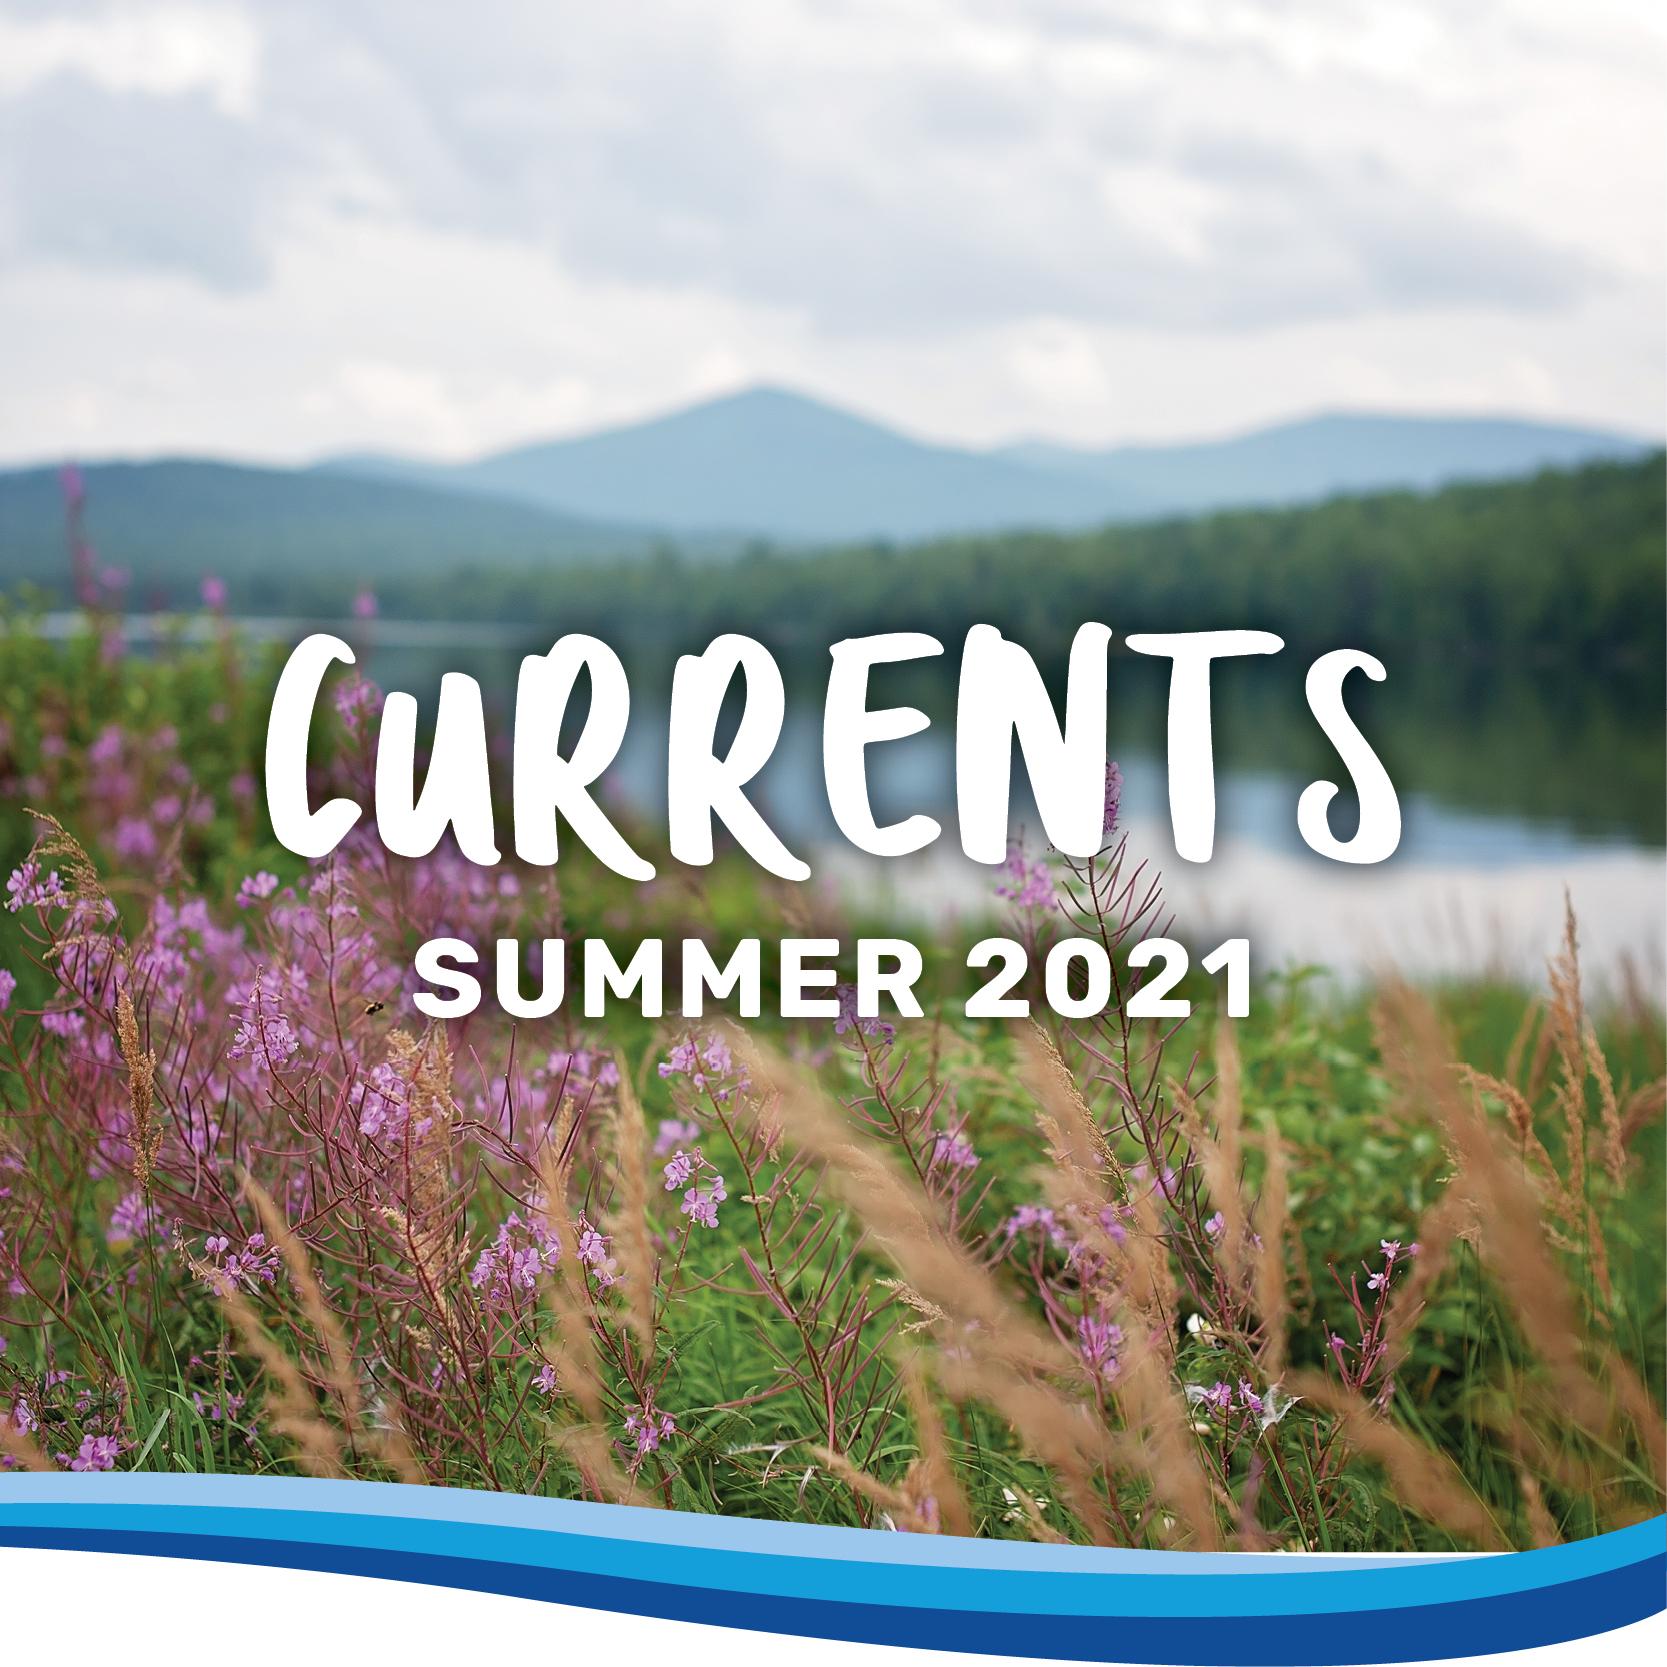 Currents summer 2021 banner